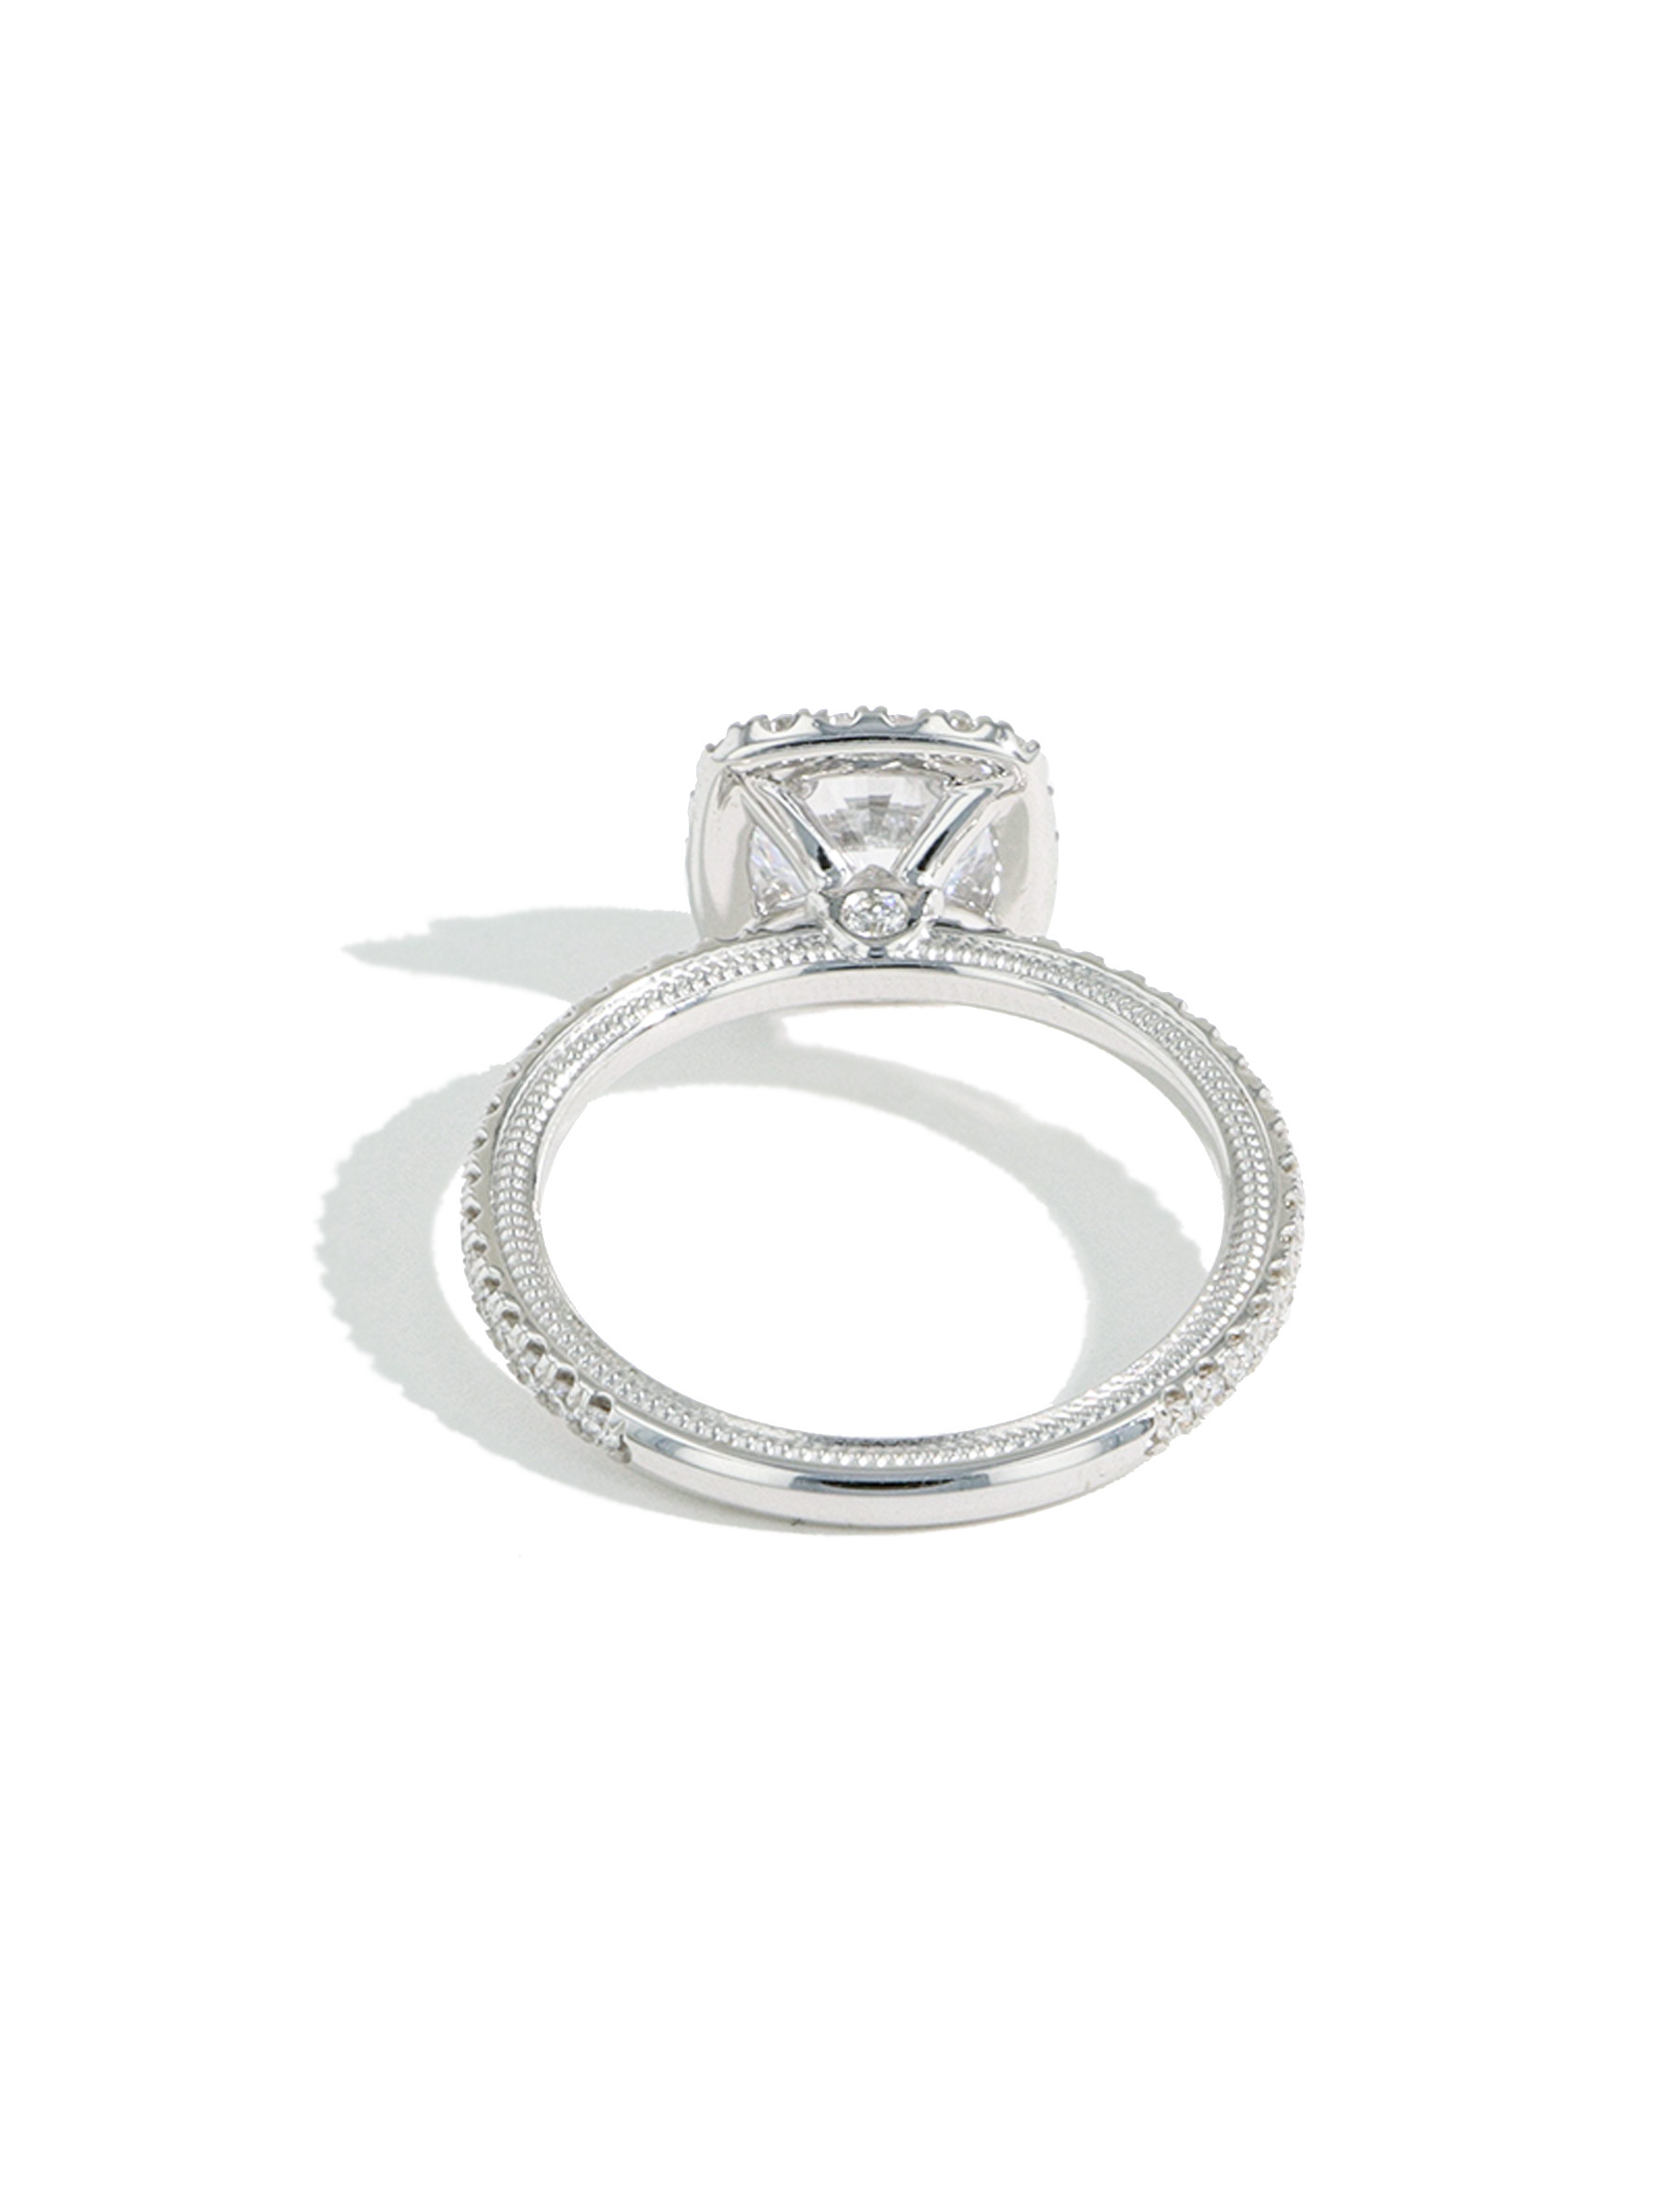 Verragio Tradition Cushion Halo Round Diamond Engagement Ring Setting back view